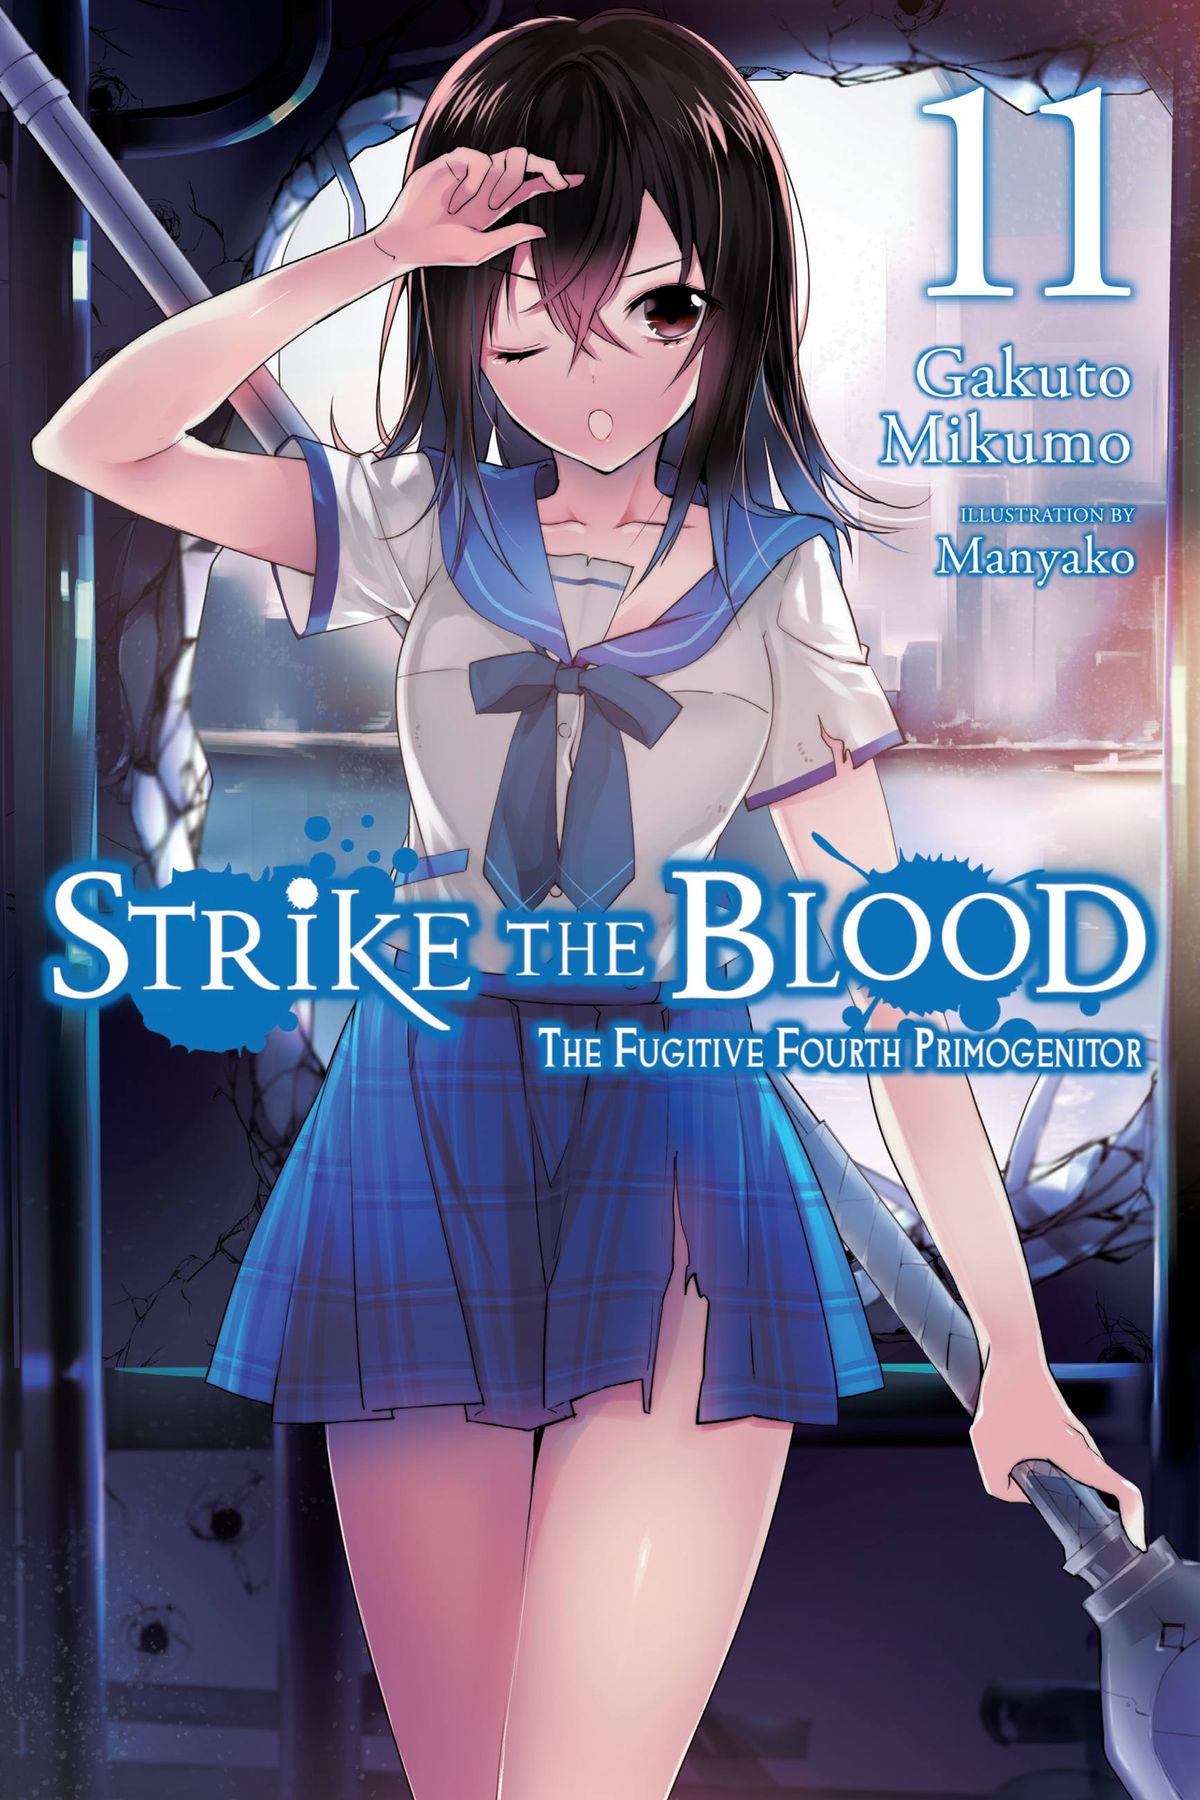 Strike the Blood (Literature) - TV Tropes